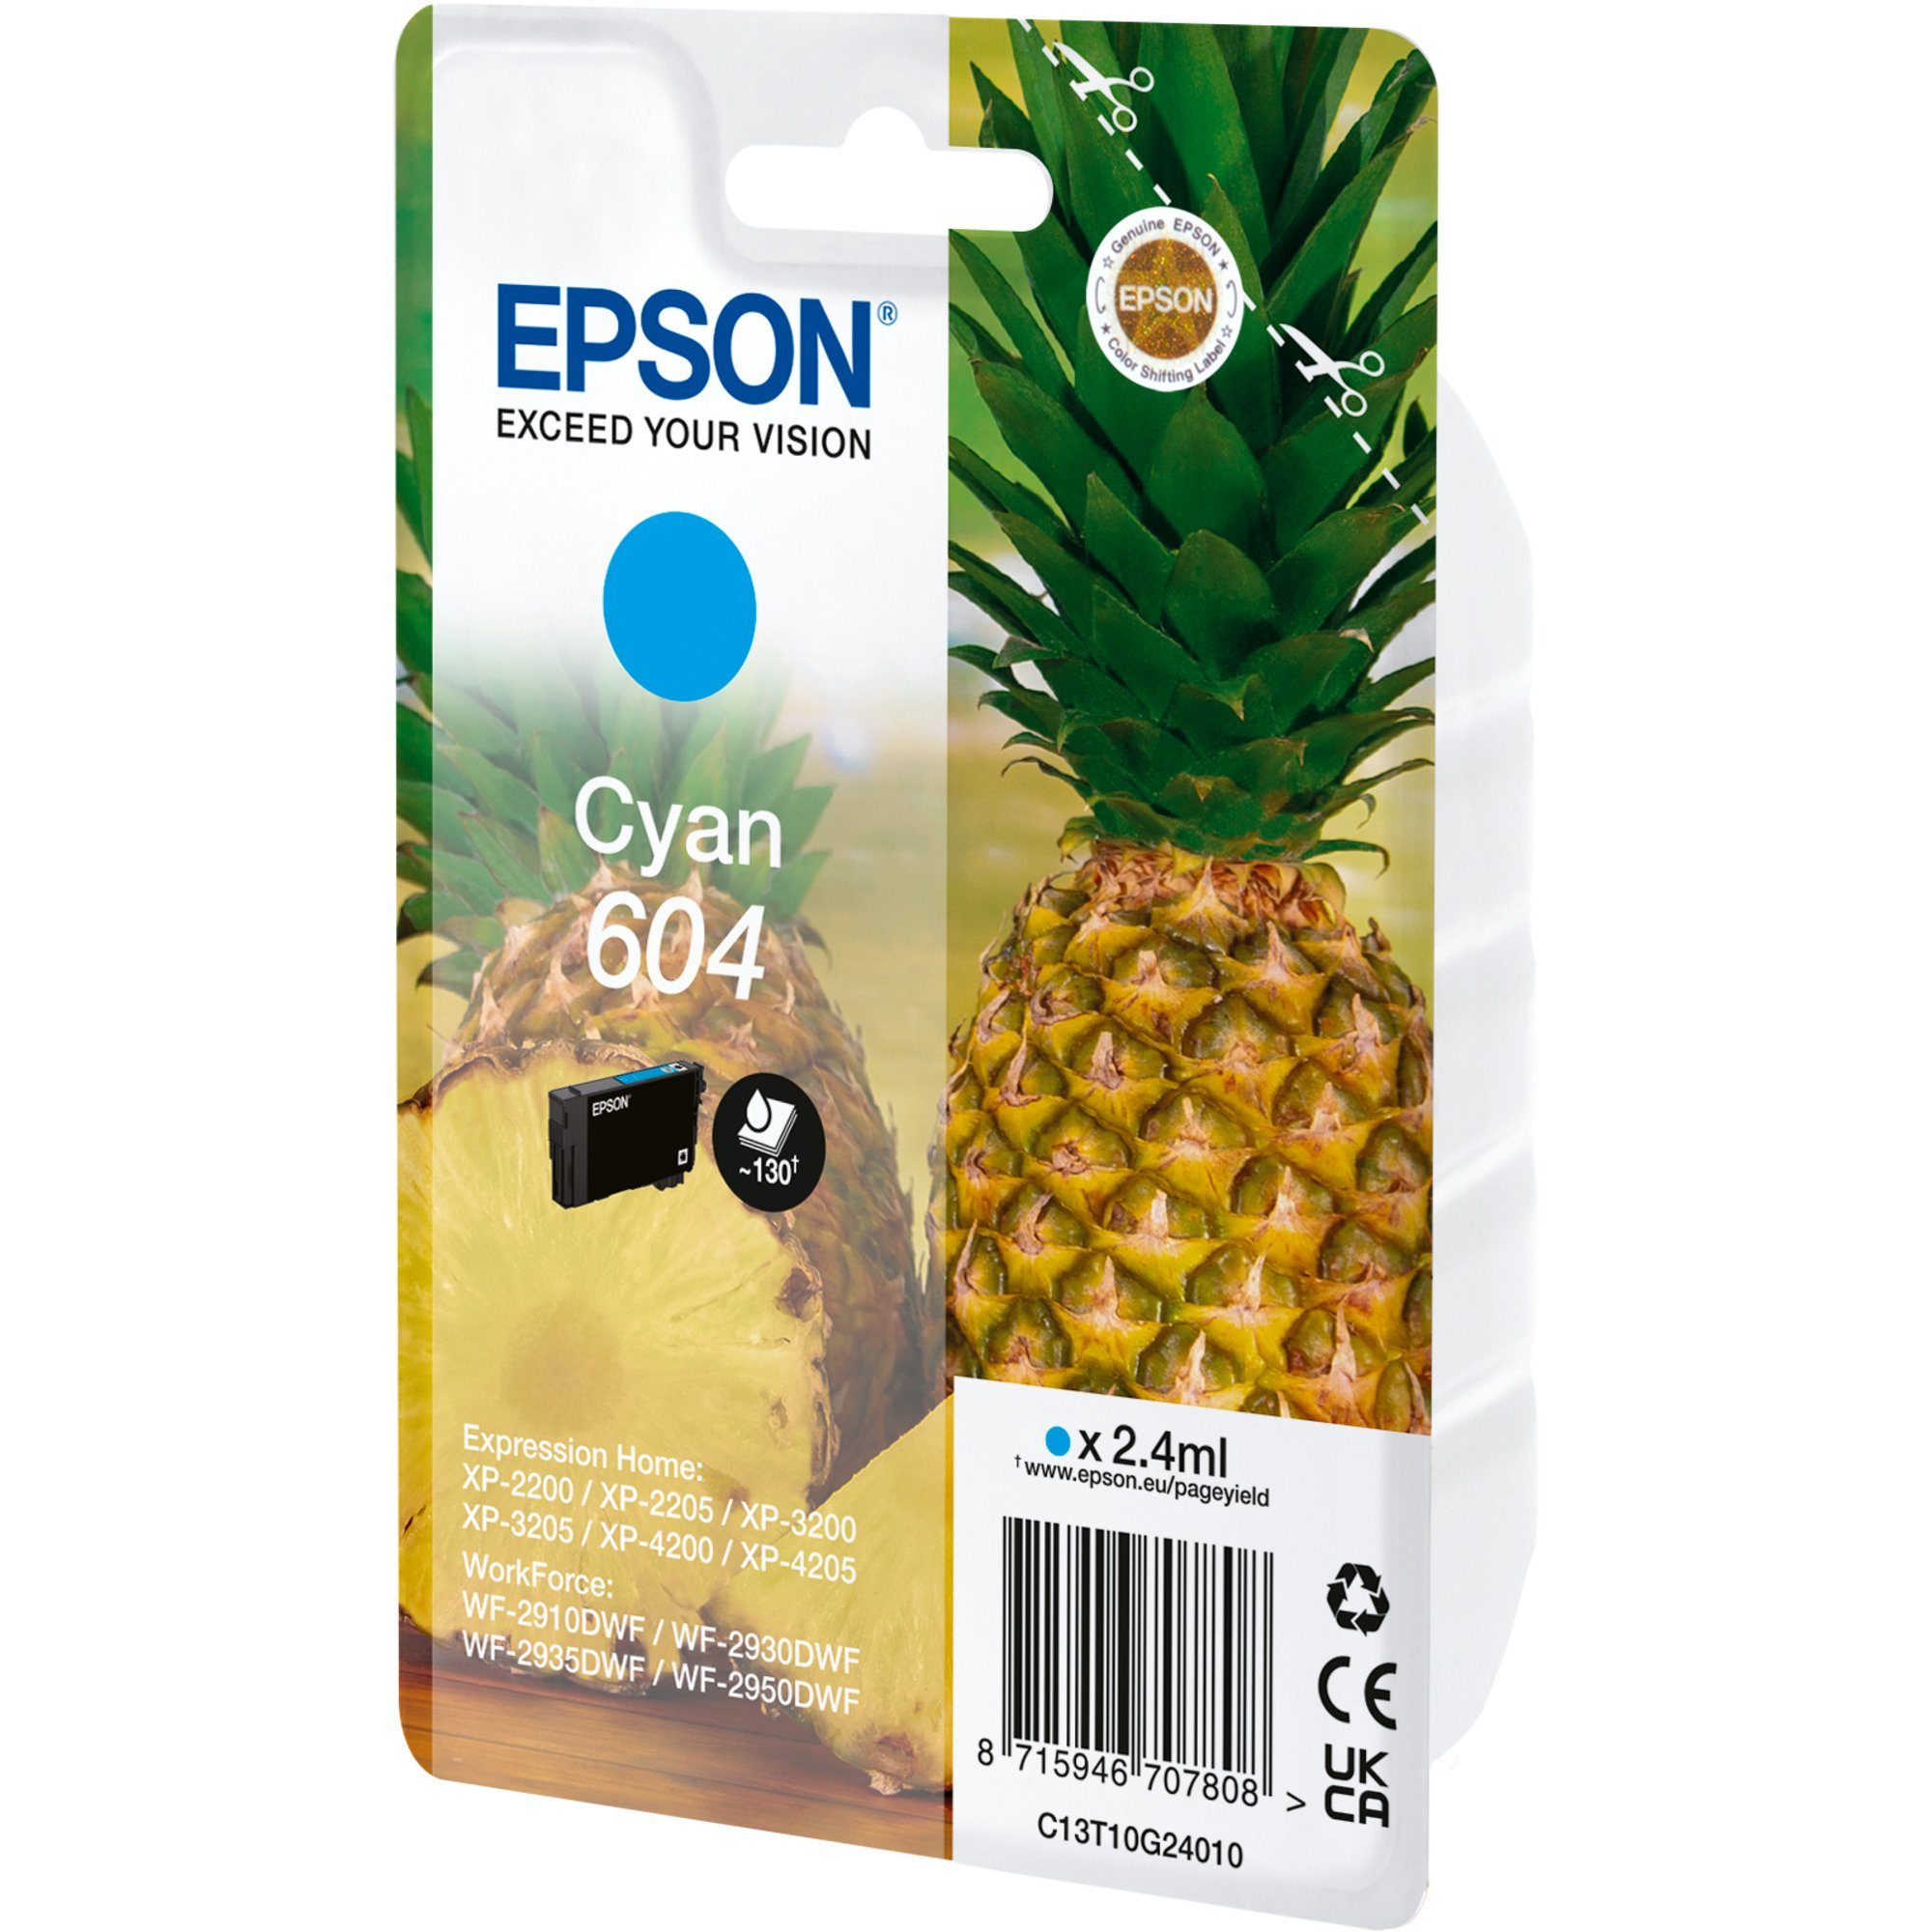 Epson Epson Tinte cyan (C13T10G24010) Tintenpatrone 604